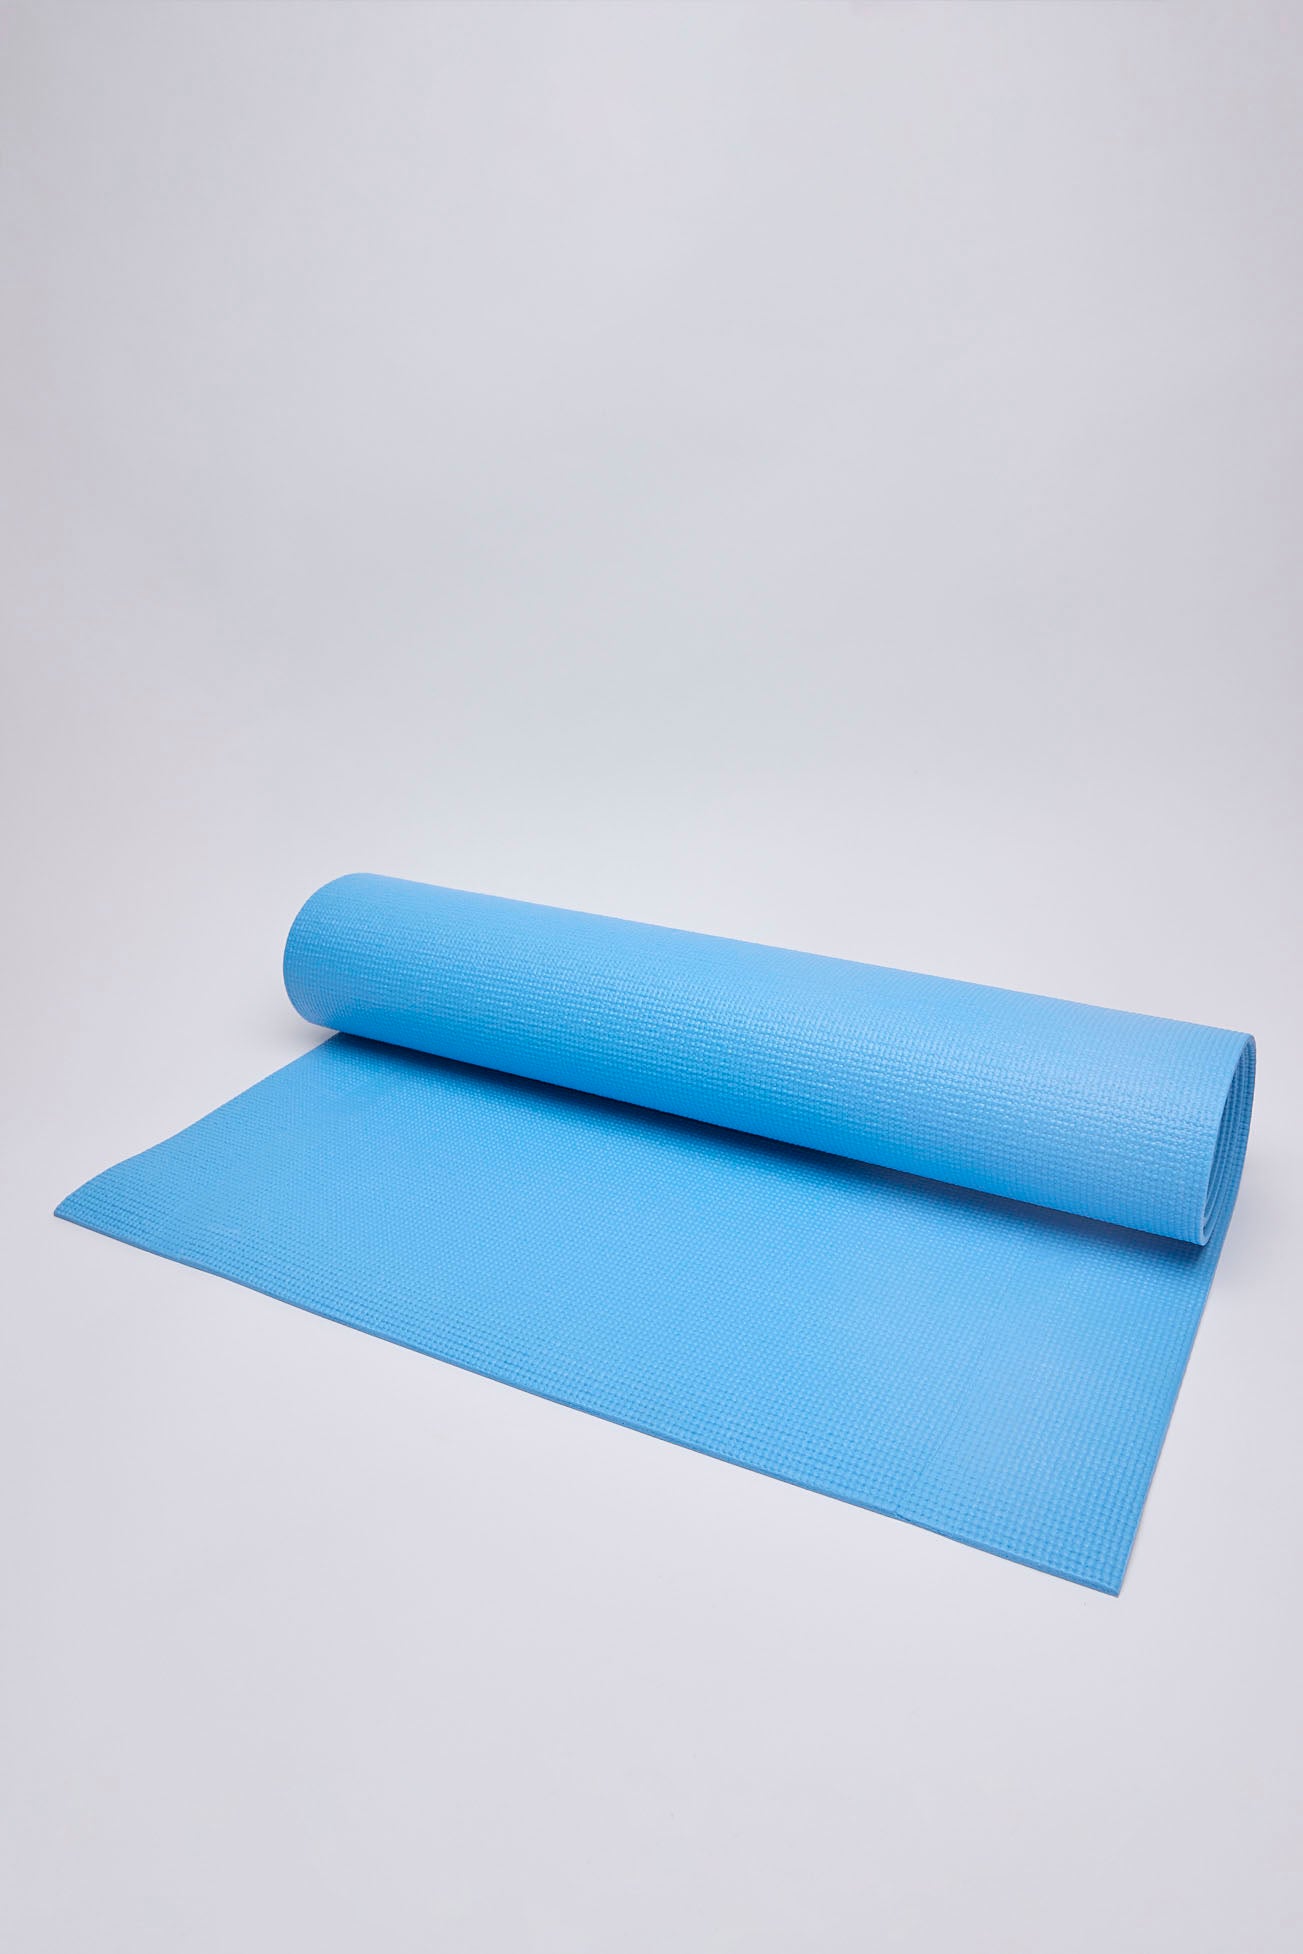 UNPLUG By Bluenotes Yoga Mat